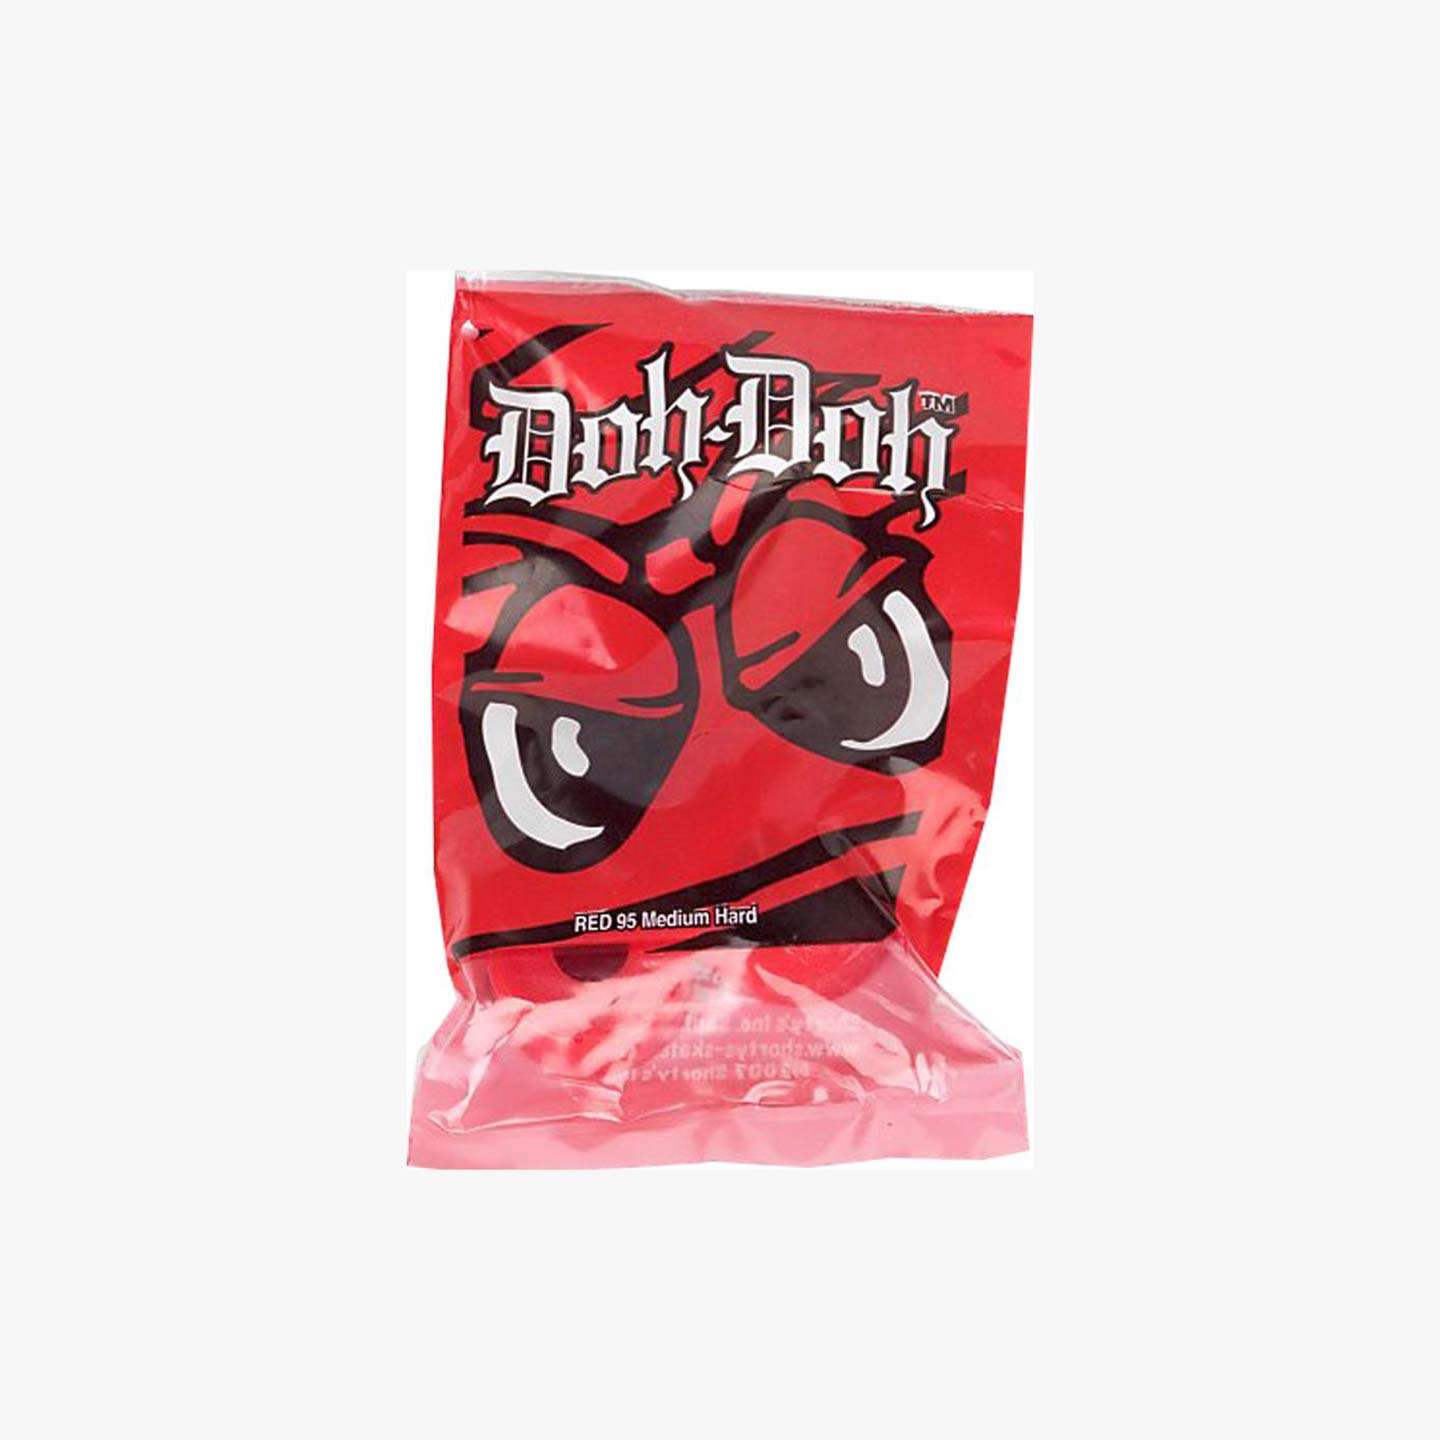 Shorty´s Bushings Doh-Doh 95A Red Medium Hard 01